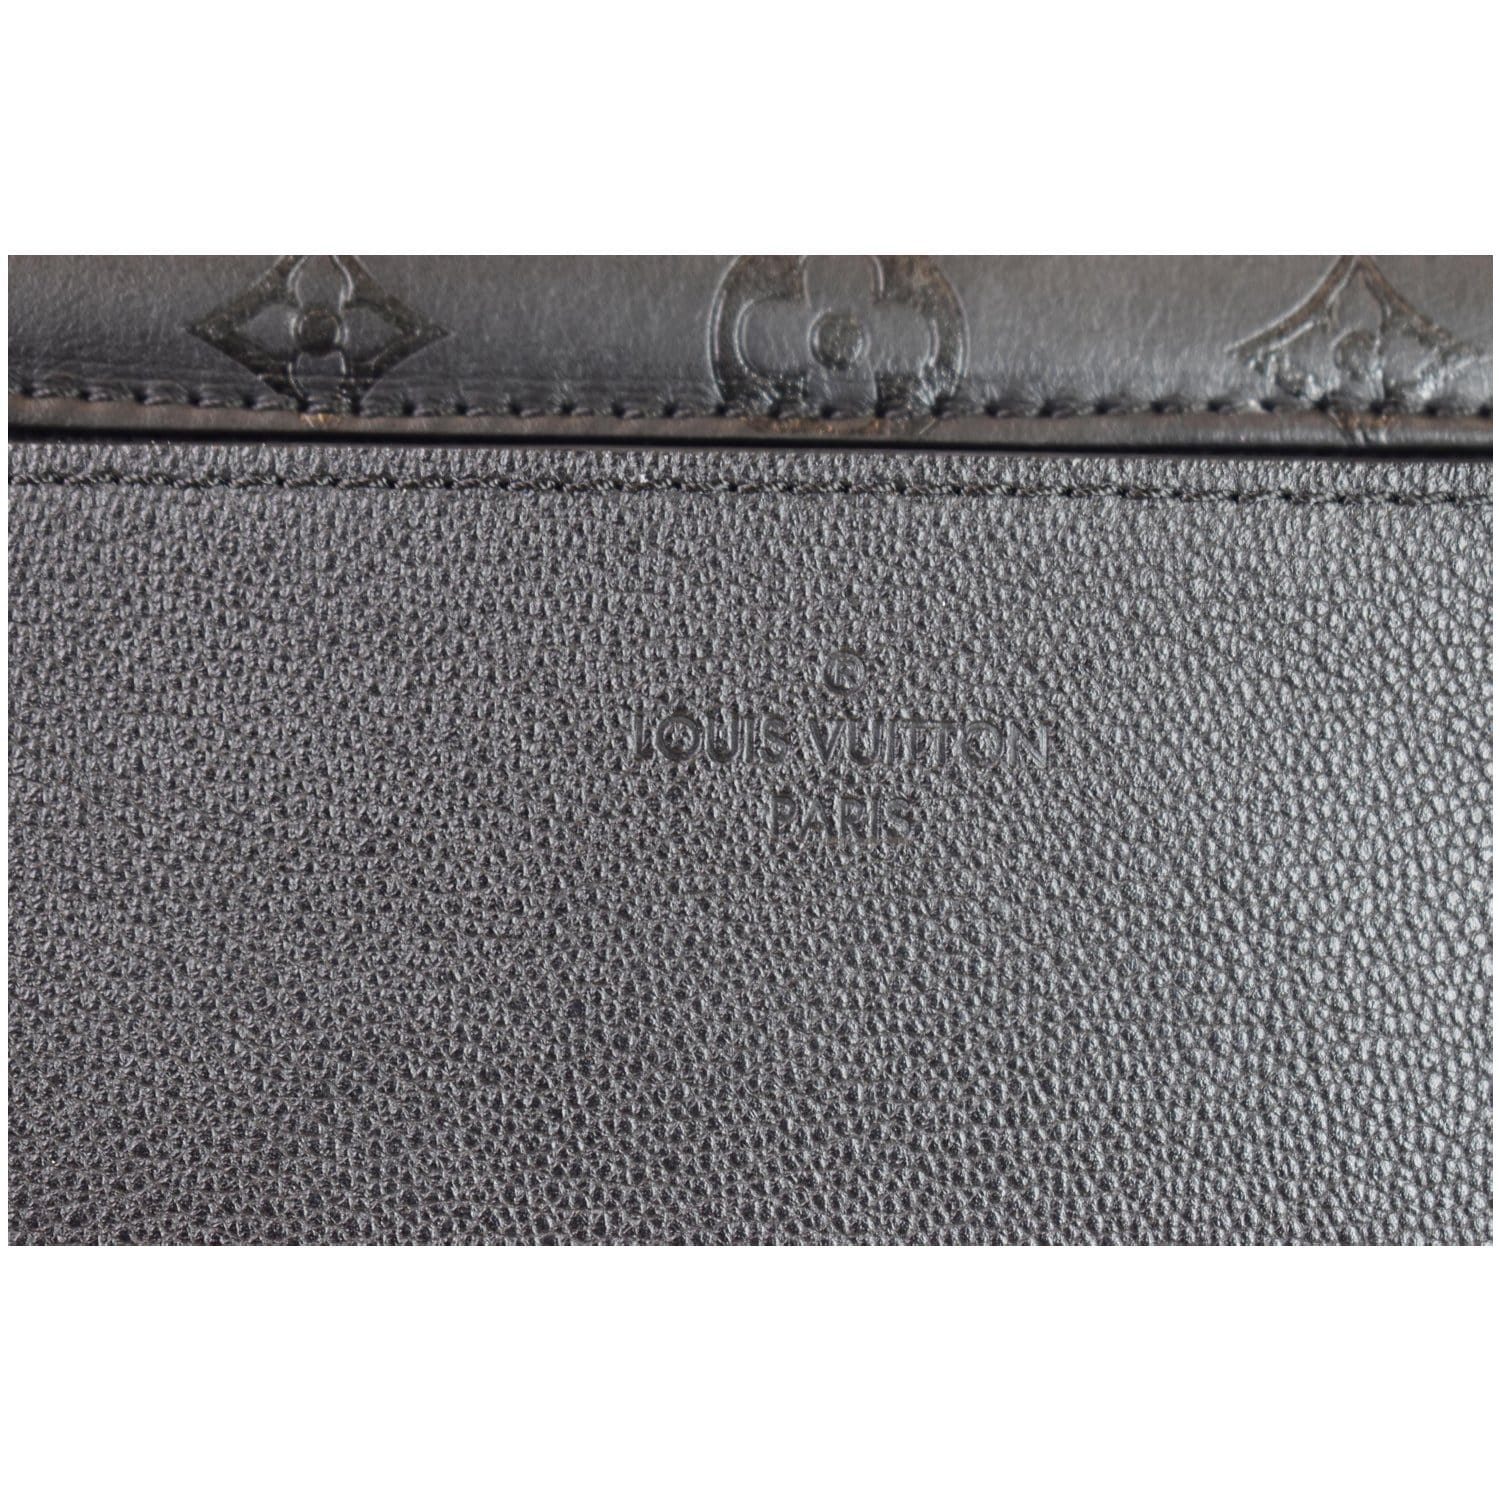 Louis Vuitton Very One Handle Bag Monogram Leather – MET Jewelry